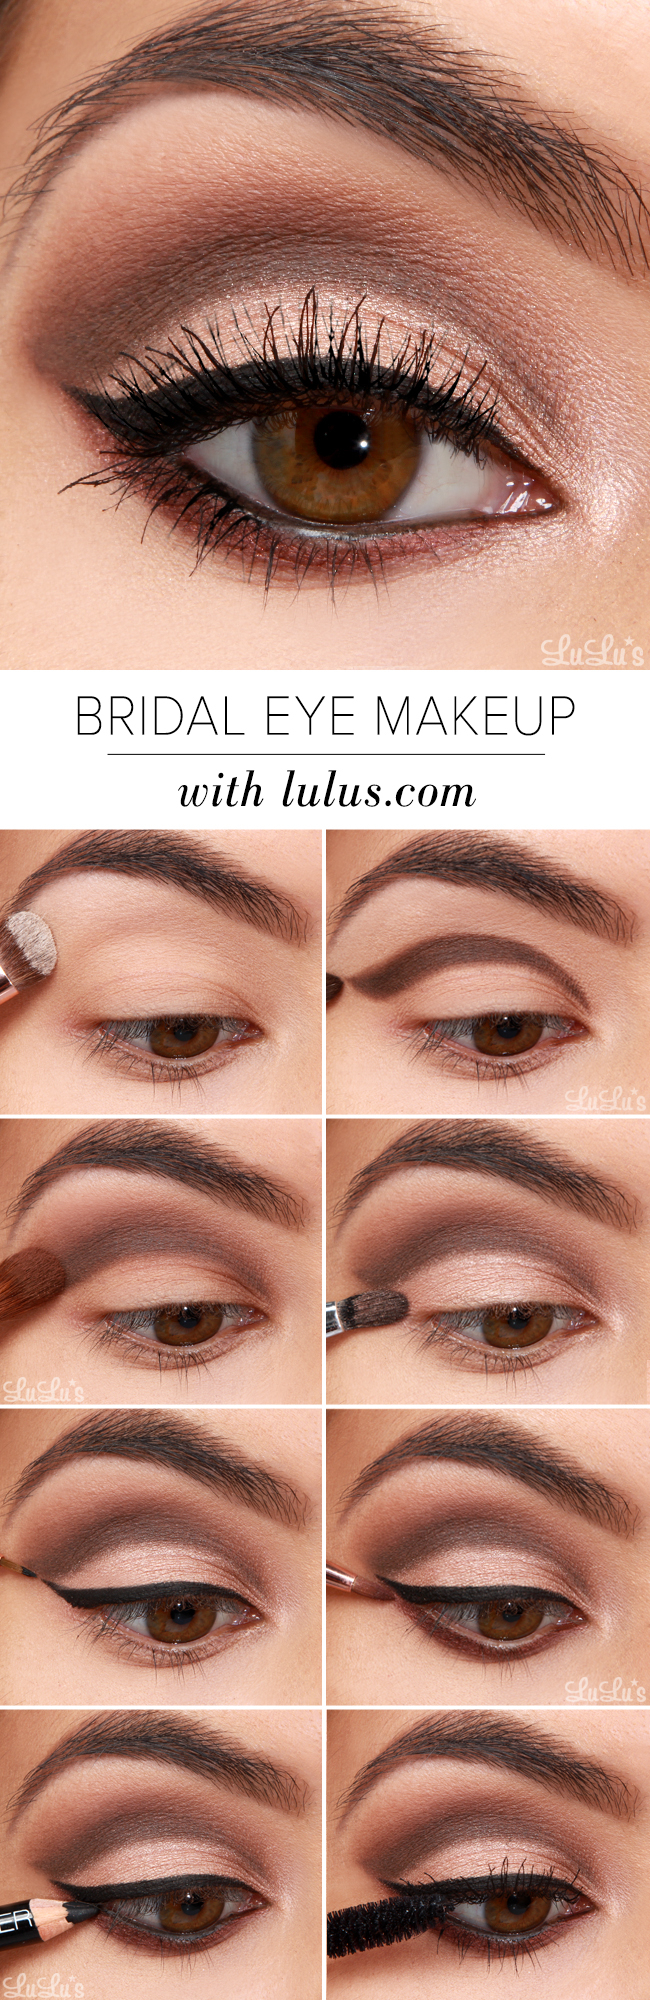 Bridal Eyes Makeup Pictures Lulus How To Bridal Eye Makeup Tutorial Lulus Fashion Blog